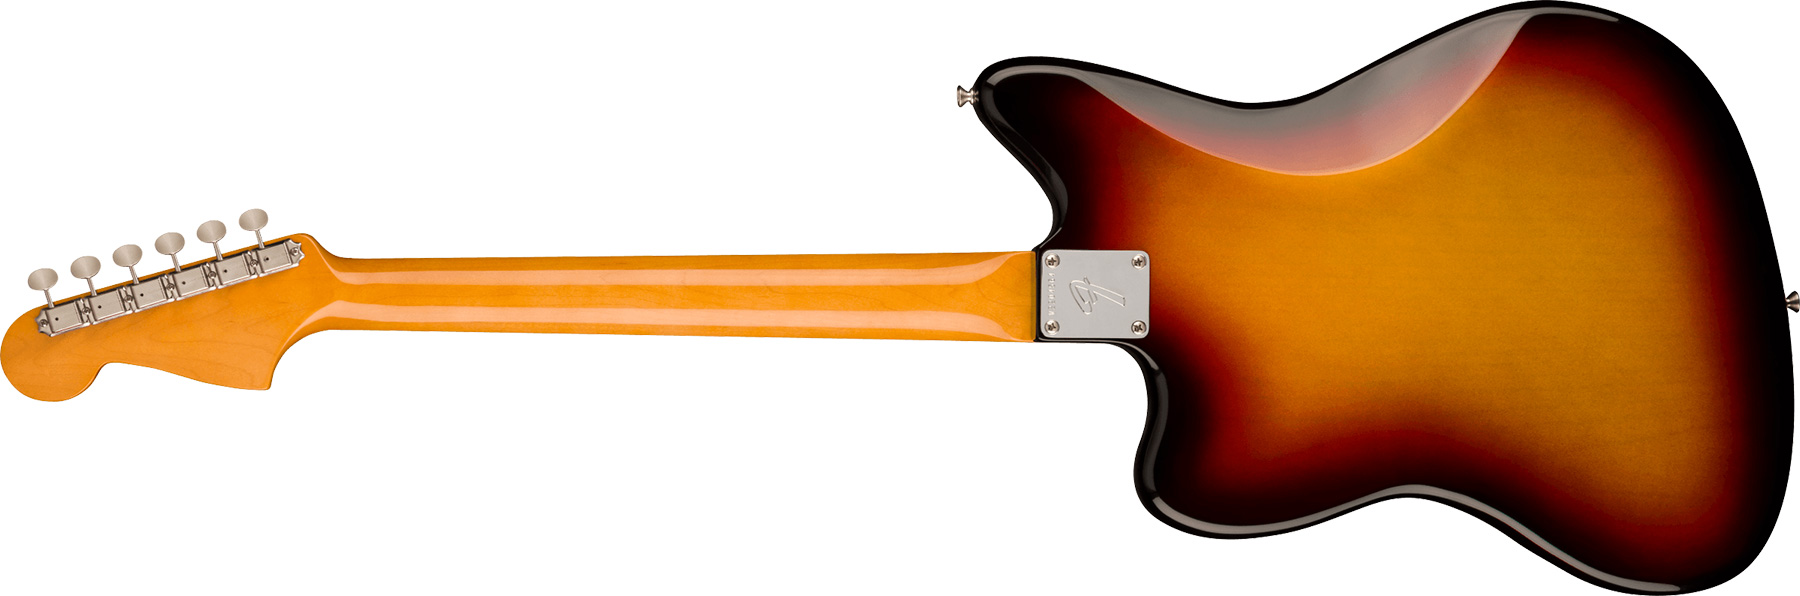 Fender Jazzmaster 1966 American Vintage Ii Usa Sh Trem Rw - 3-color Sunburst - Guitarra electrica retro rock - Variation 1